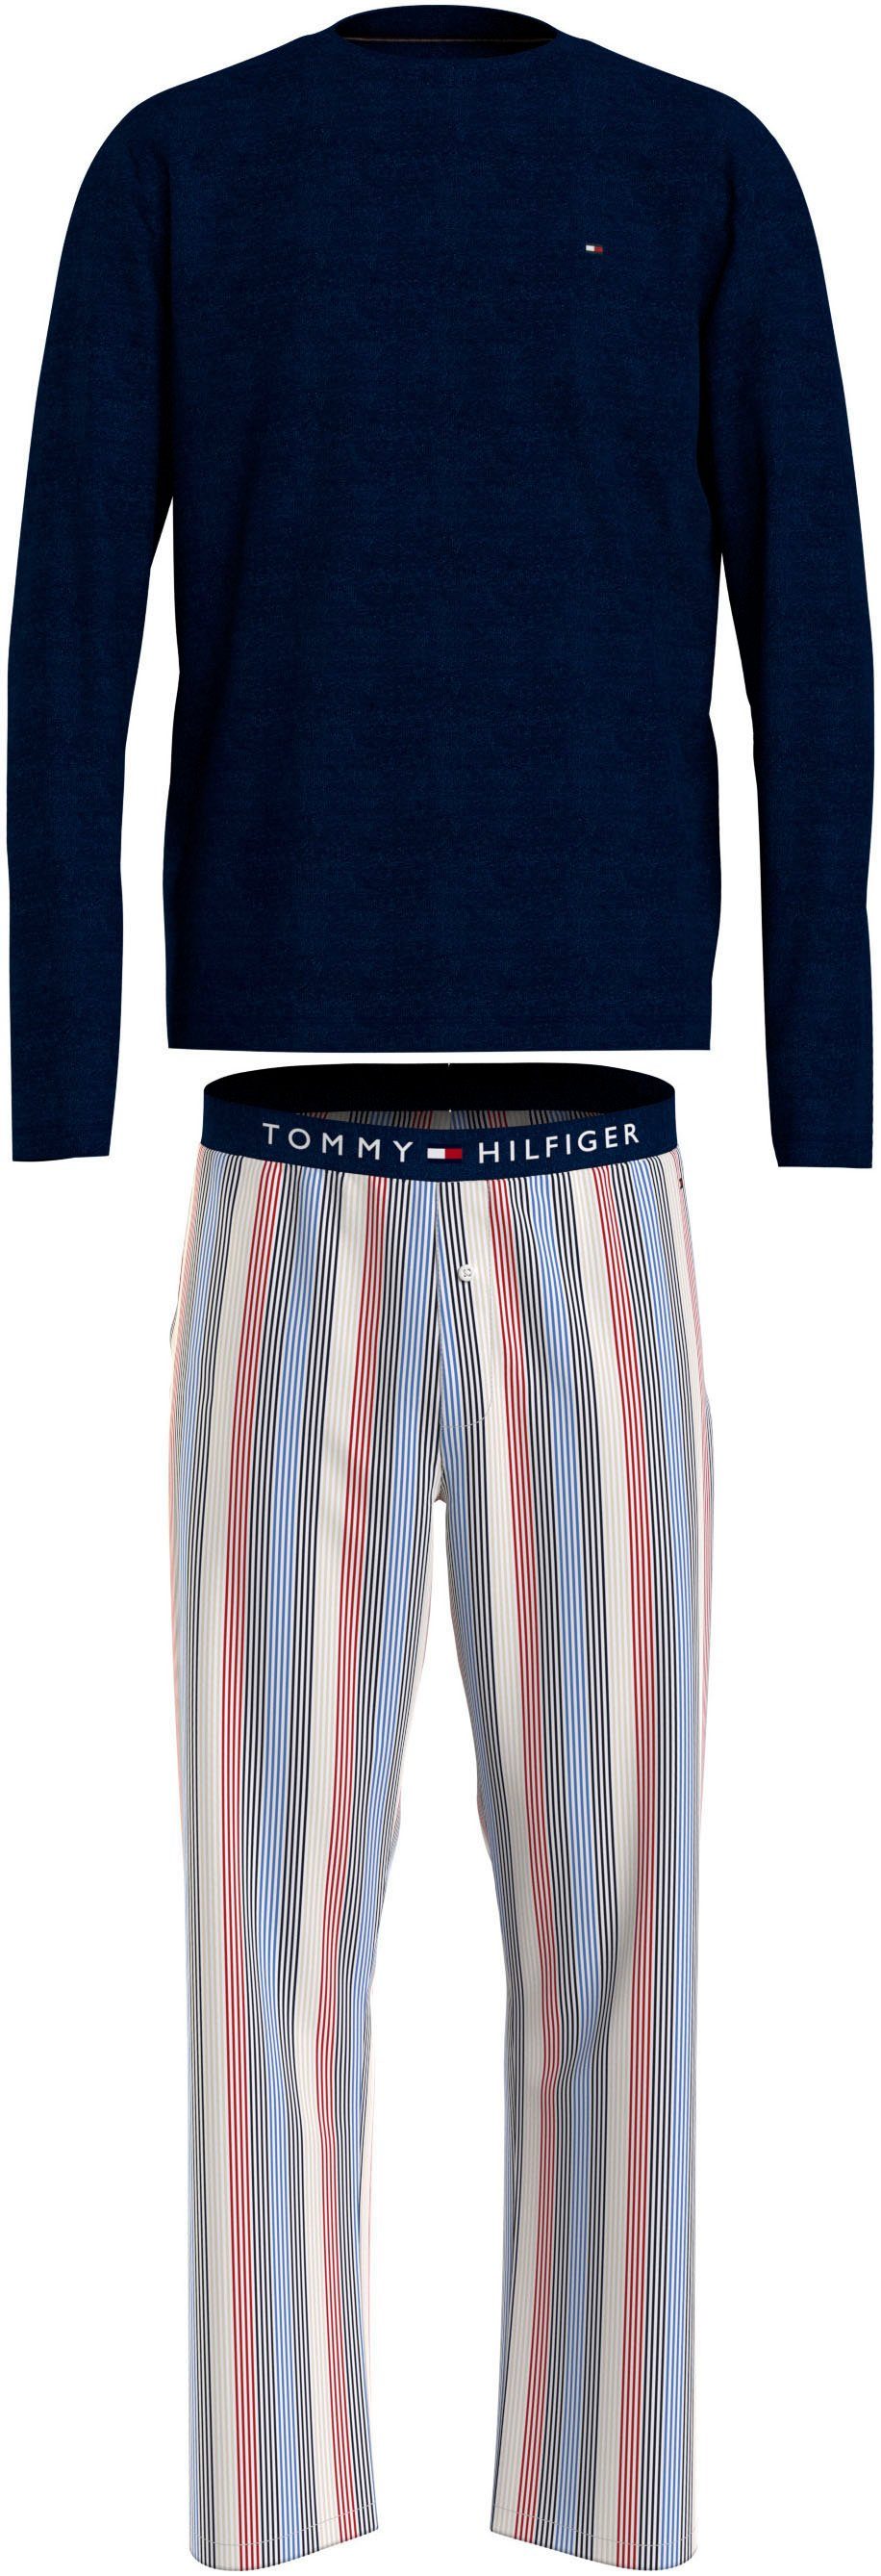 PANT SET LS Pyjama Hilfiger 2er) mit Underwear tlg., Logobund PRINT (Set, Tommy 2 WOVEN